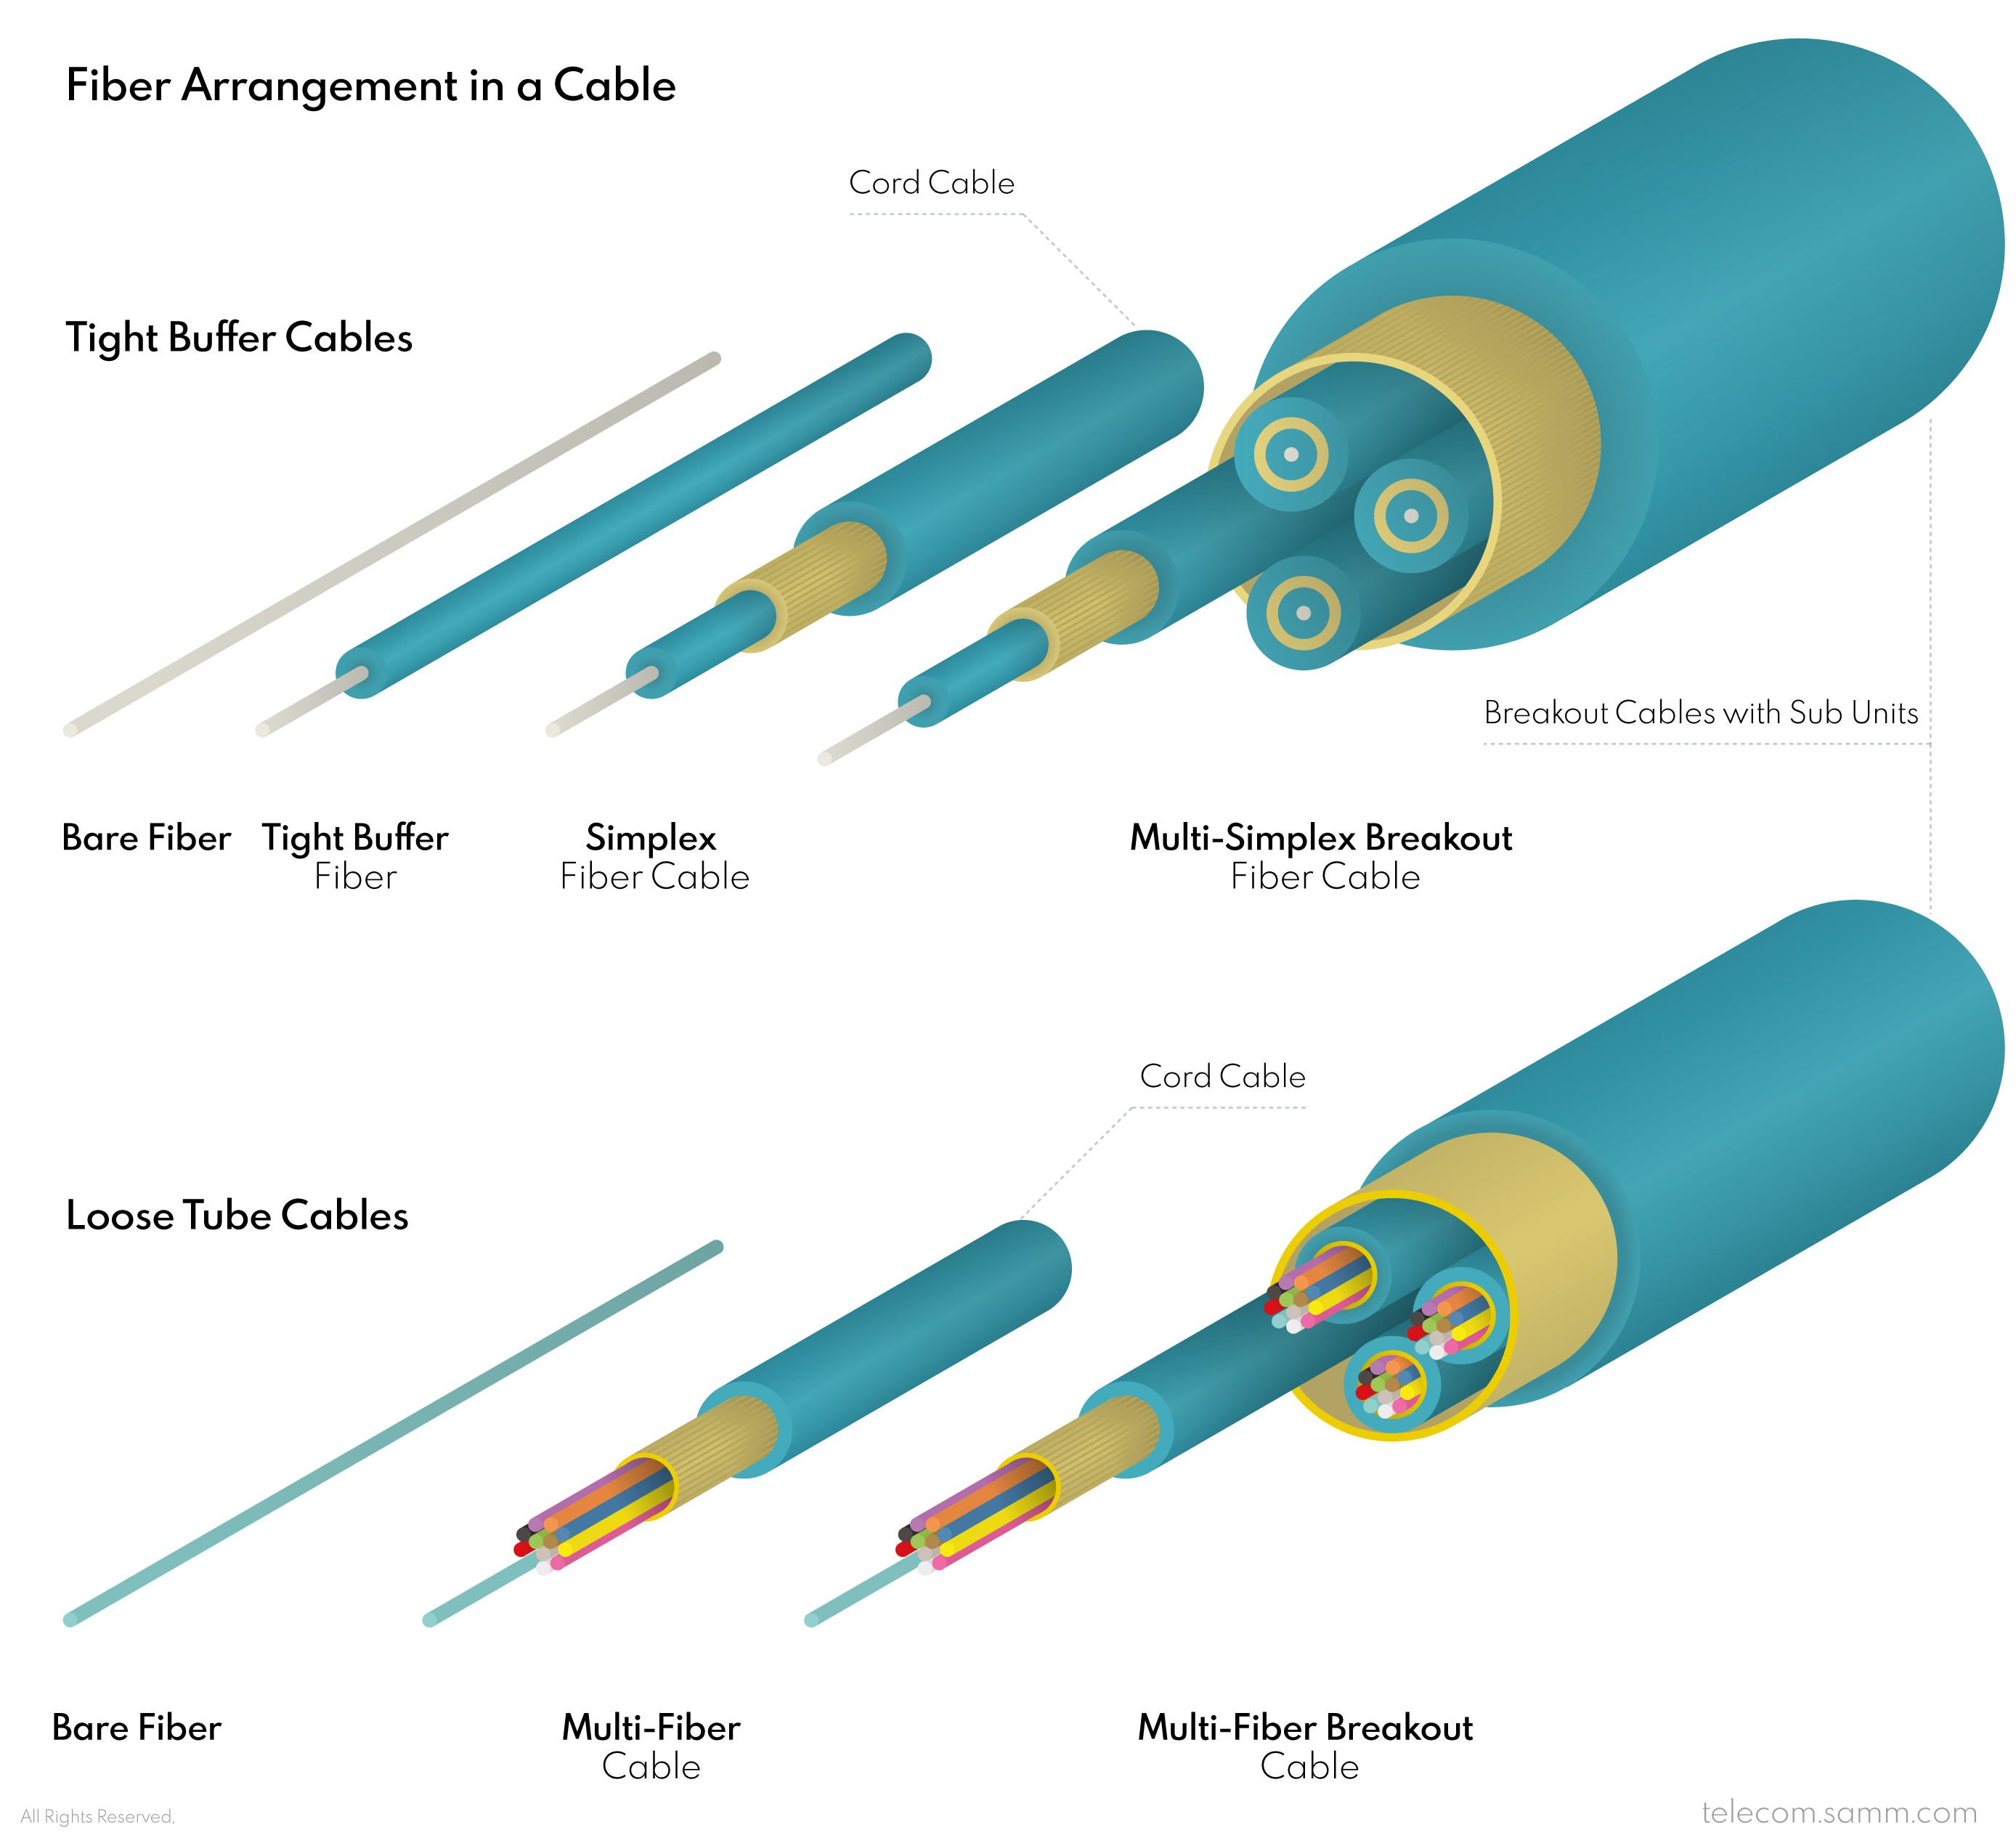 Fiber Arrangement and Sub Units in a Cable